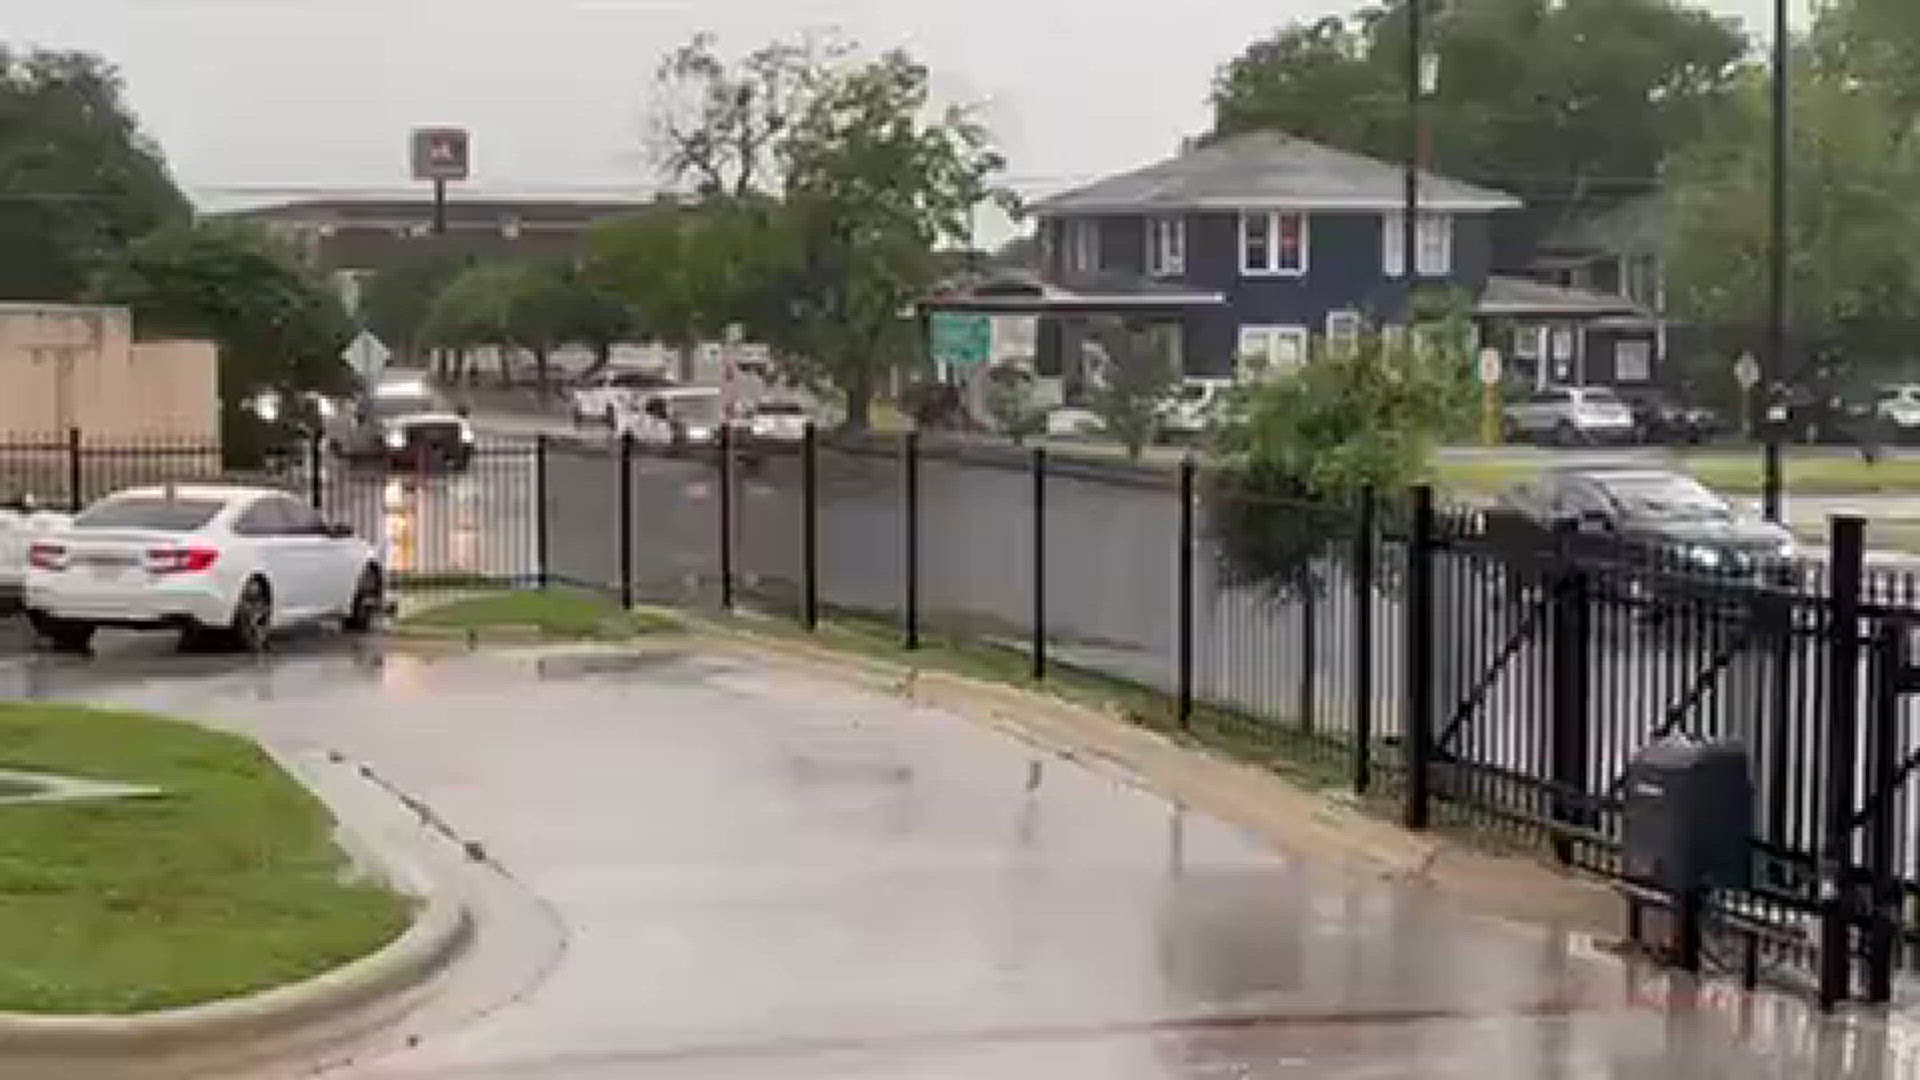 Cars splash through waters in Temple Texas
Credit: Jacob Wallin